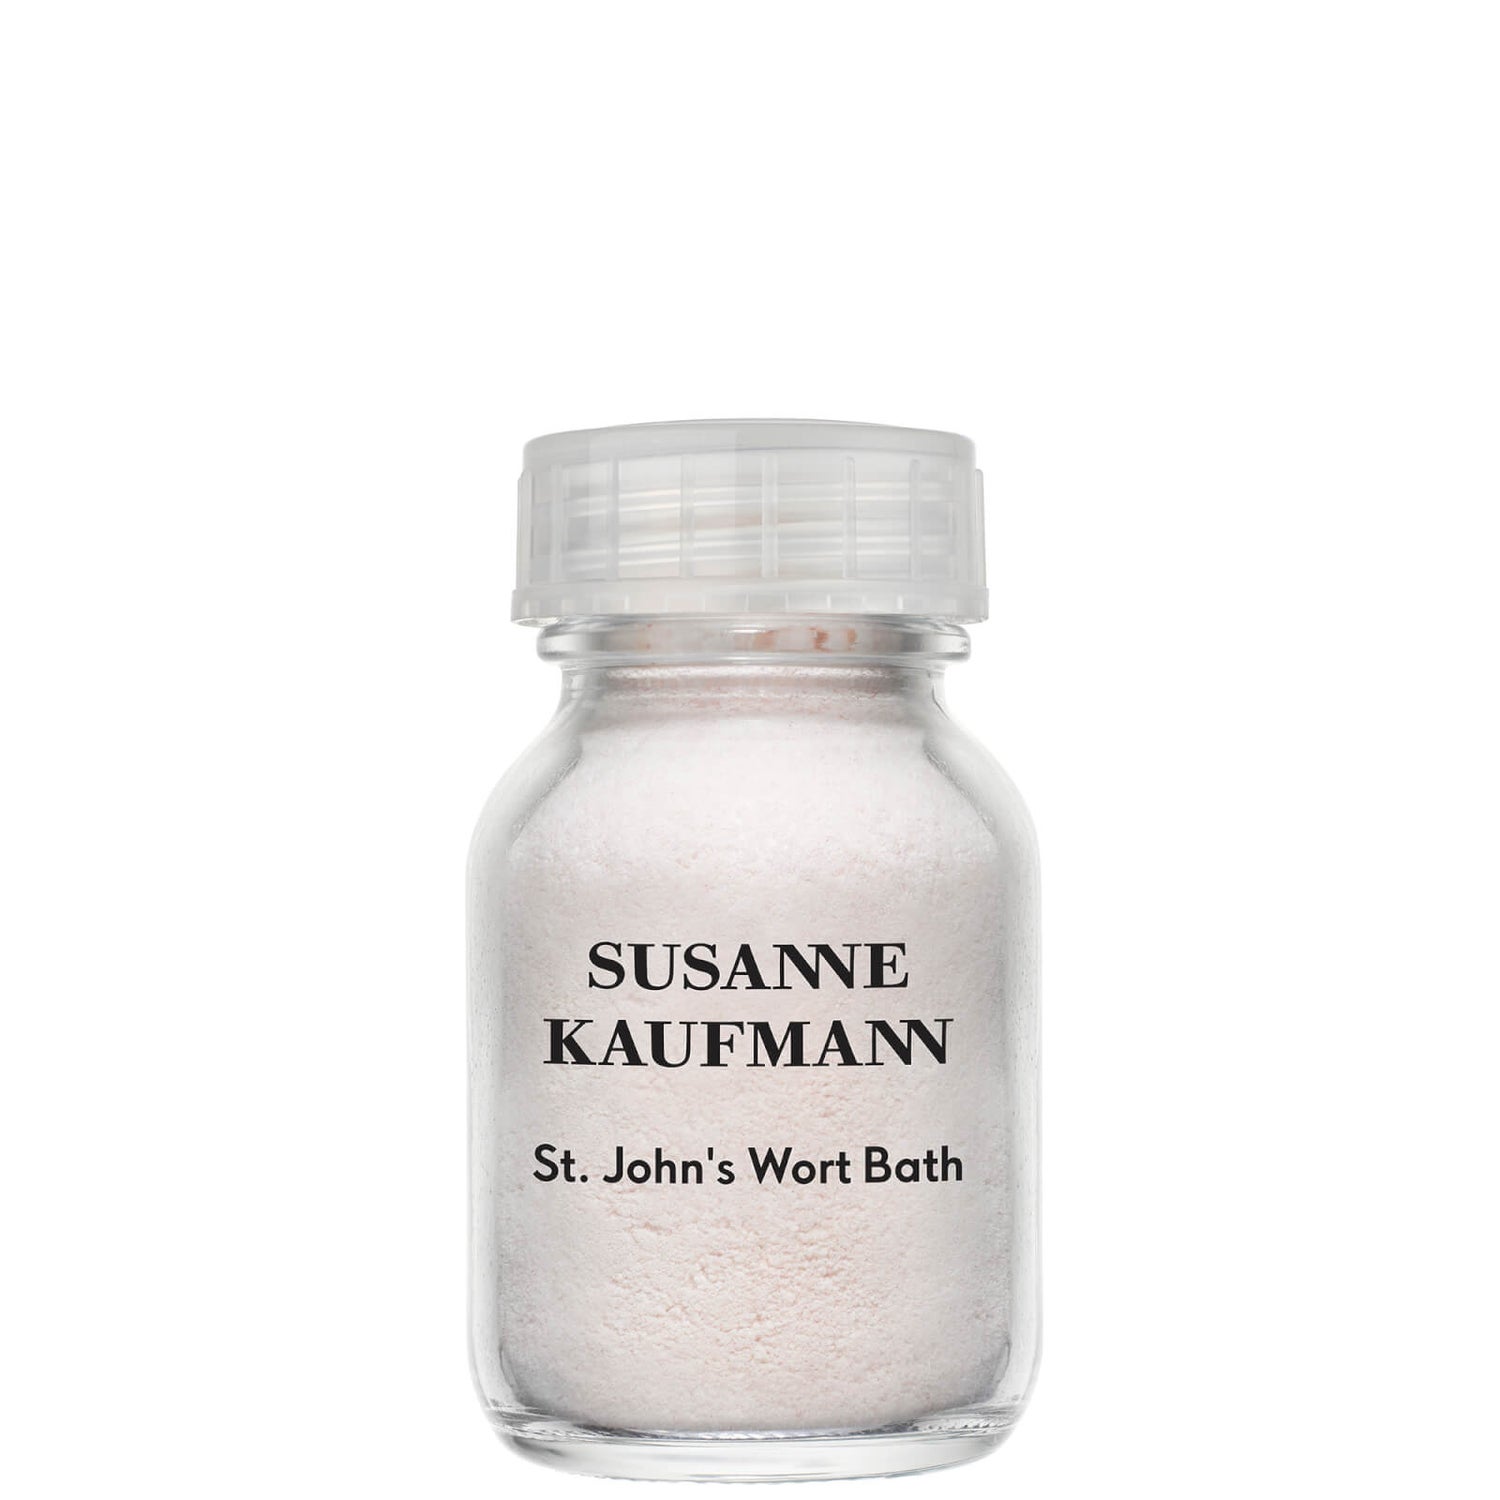 SUSANNE KAUFMANN St John's Wort Bath 50g